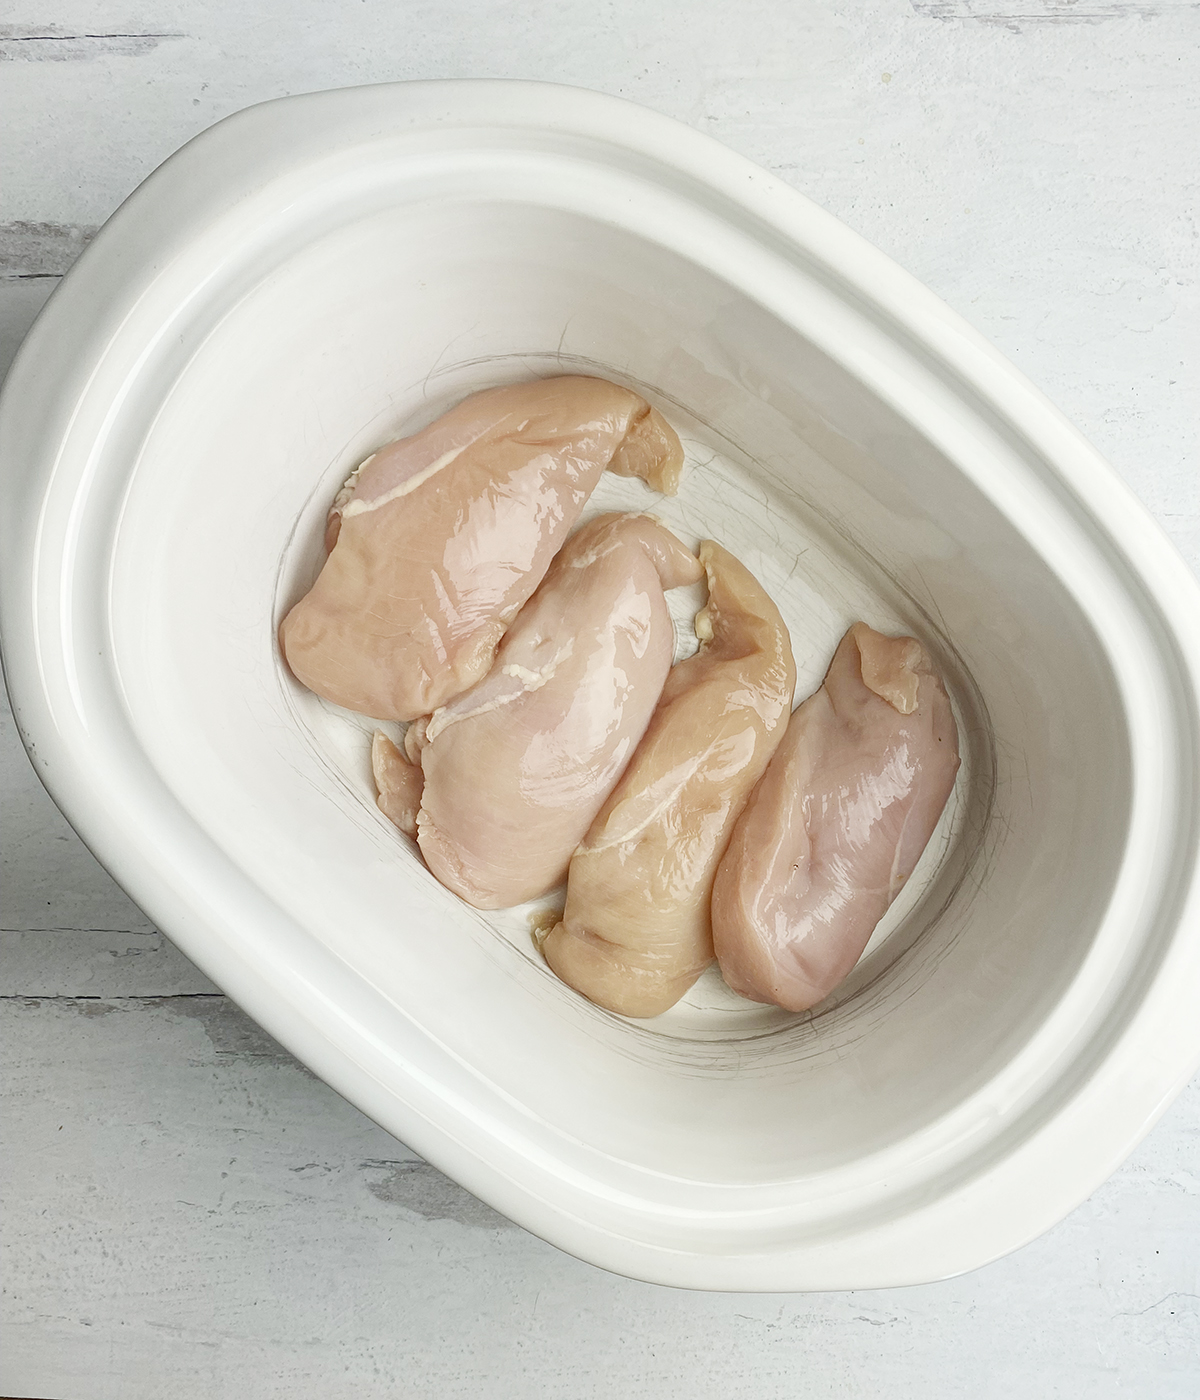 Boneless chicken breasts in a slow cooker.